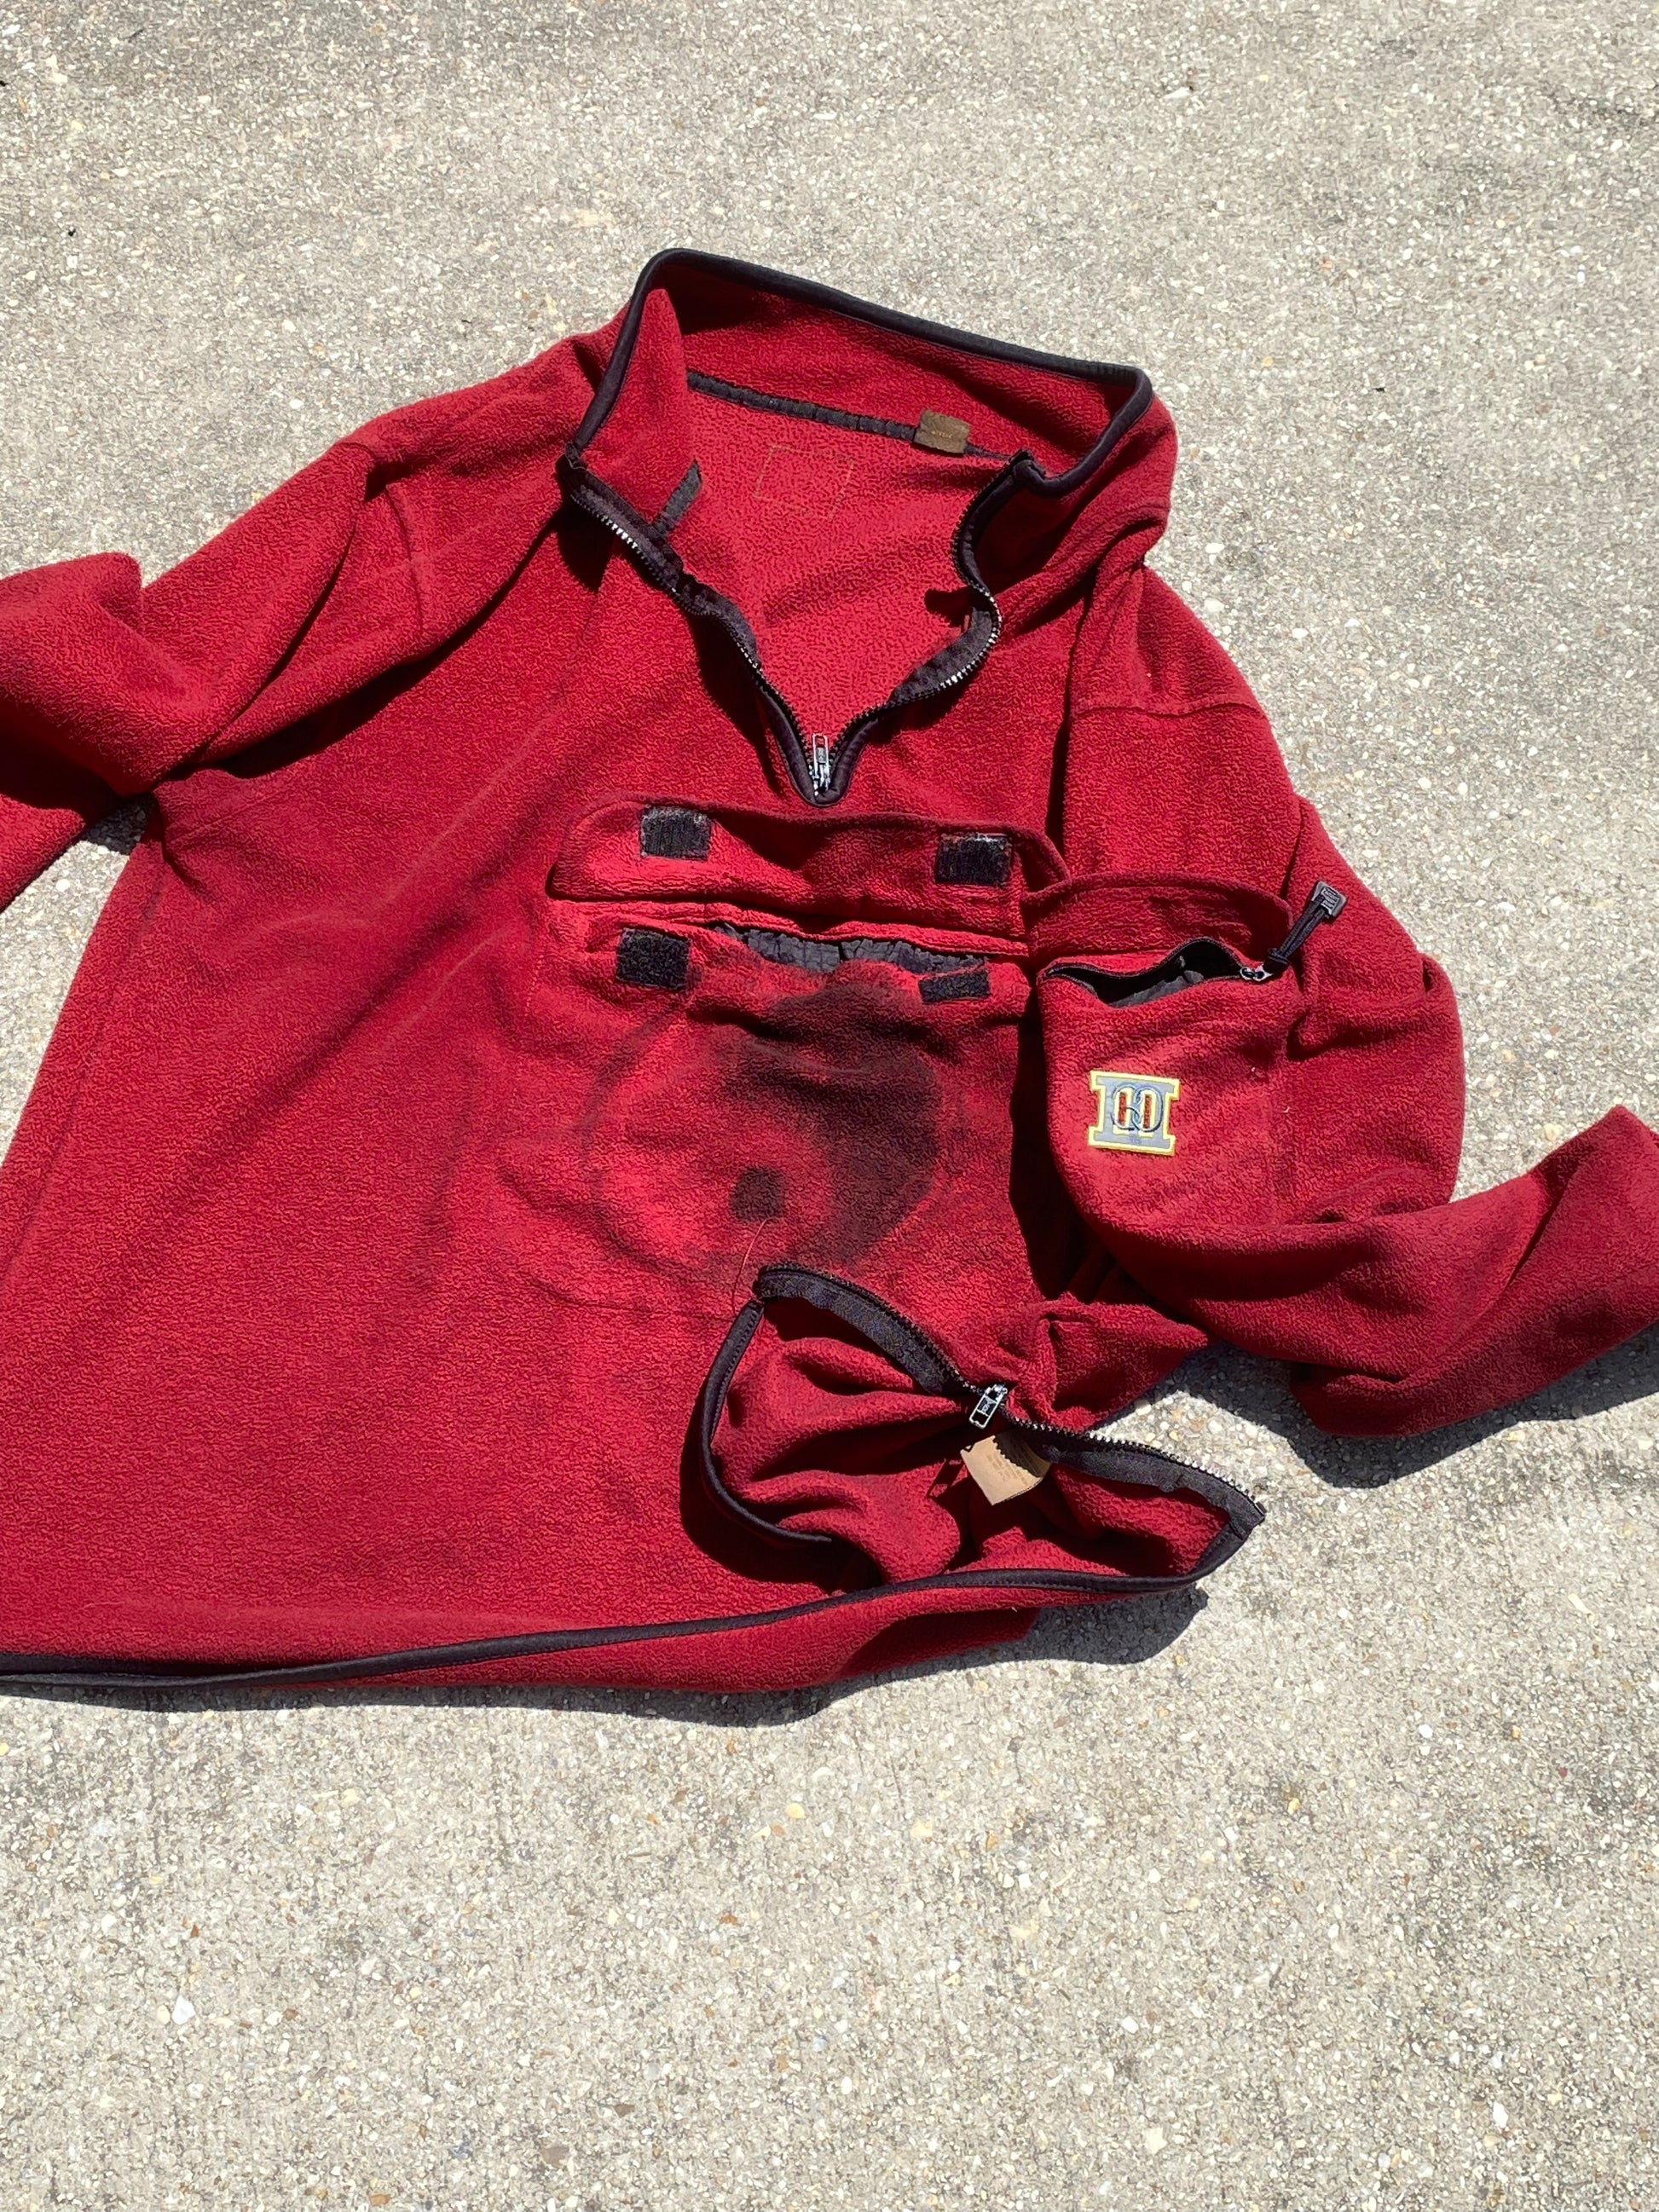 Custom Red Fleece Asics Style - Brimm Archive Wardrobe Research